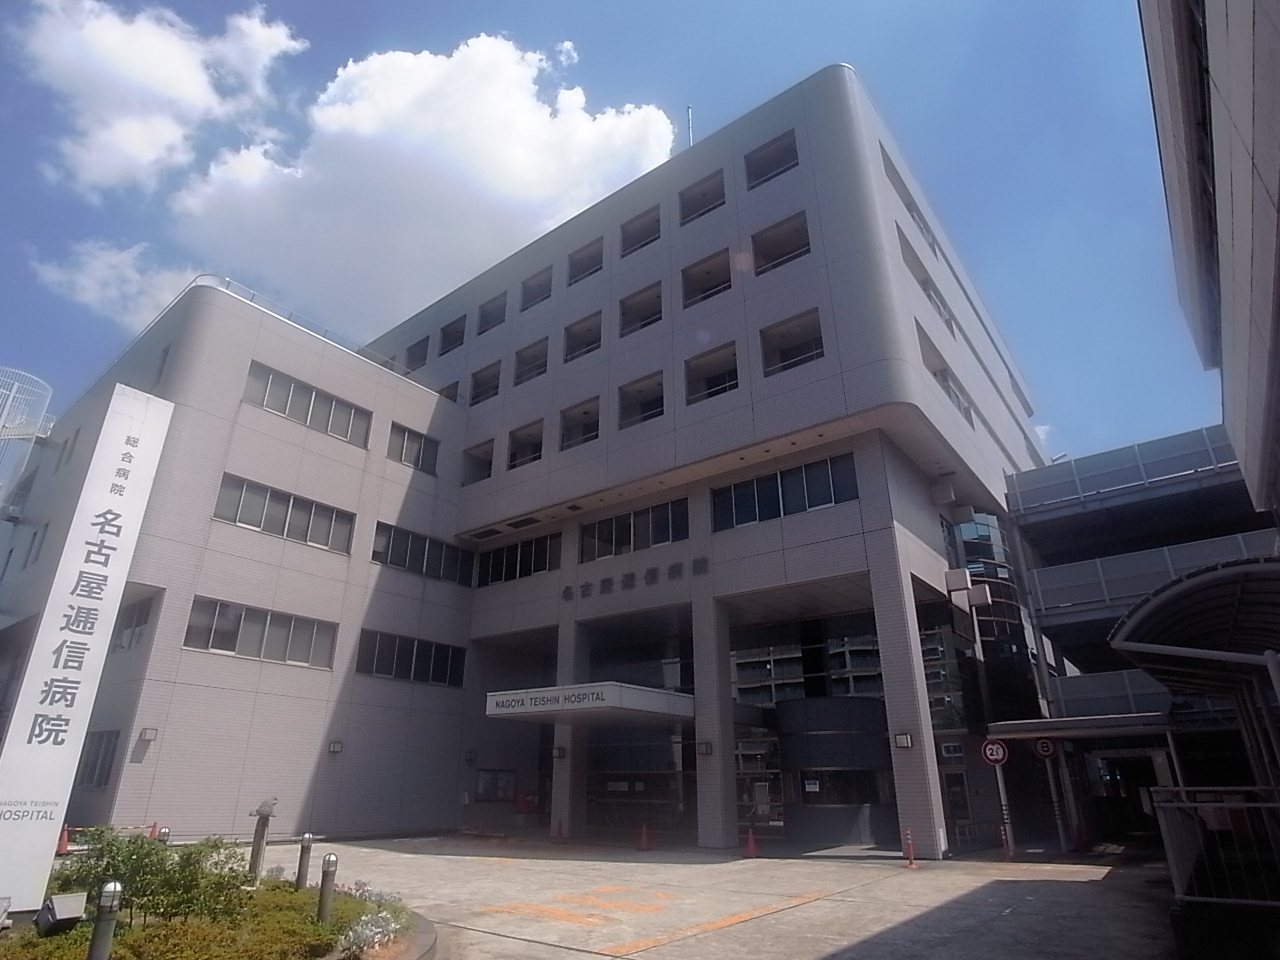 Hospital. 1000m to Nagoya the Communications Hospital (General Hospital) (hospital)